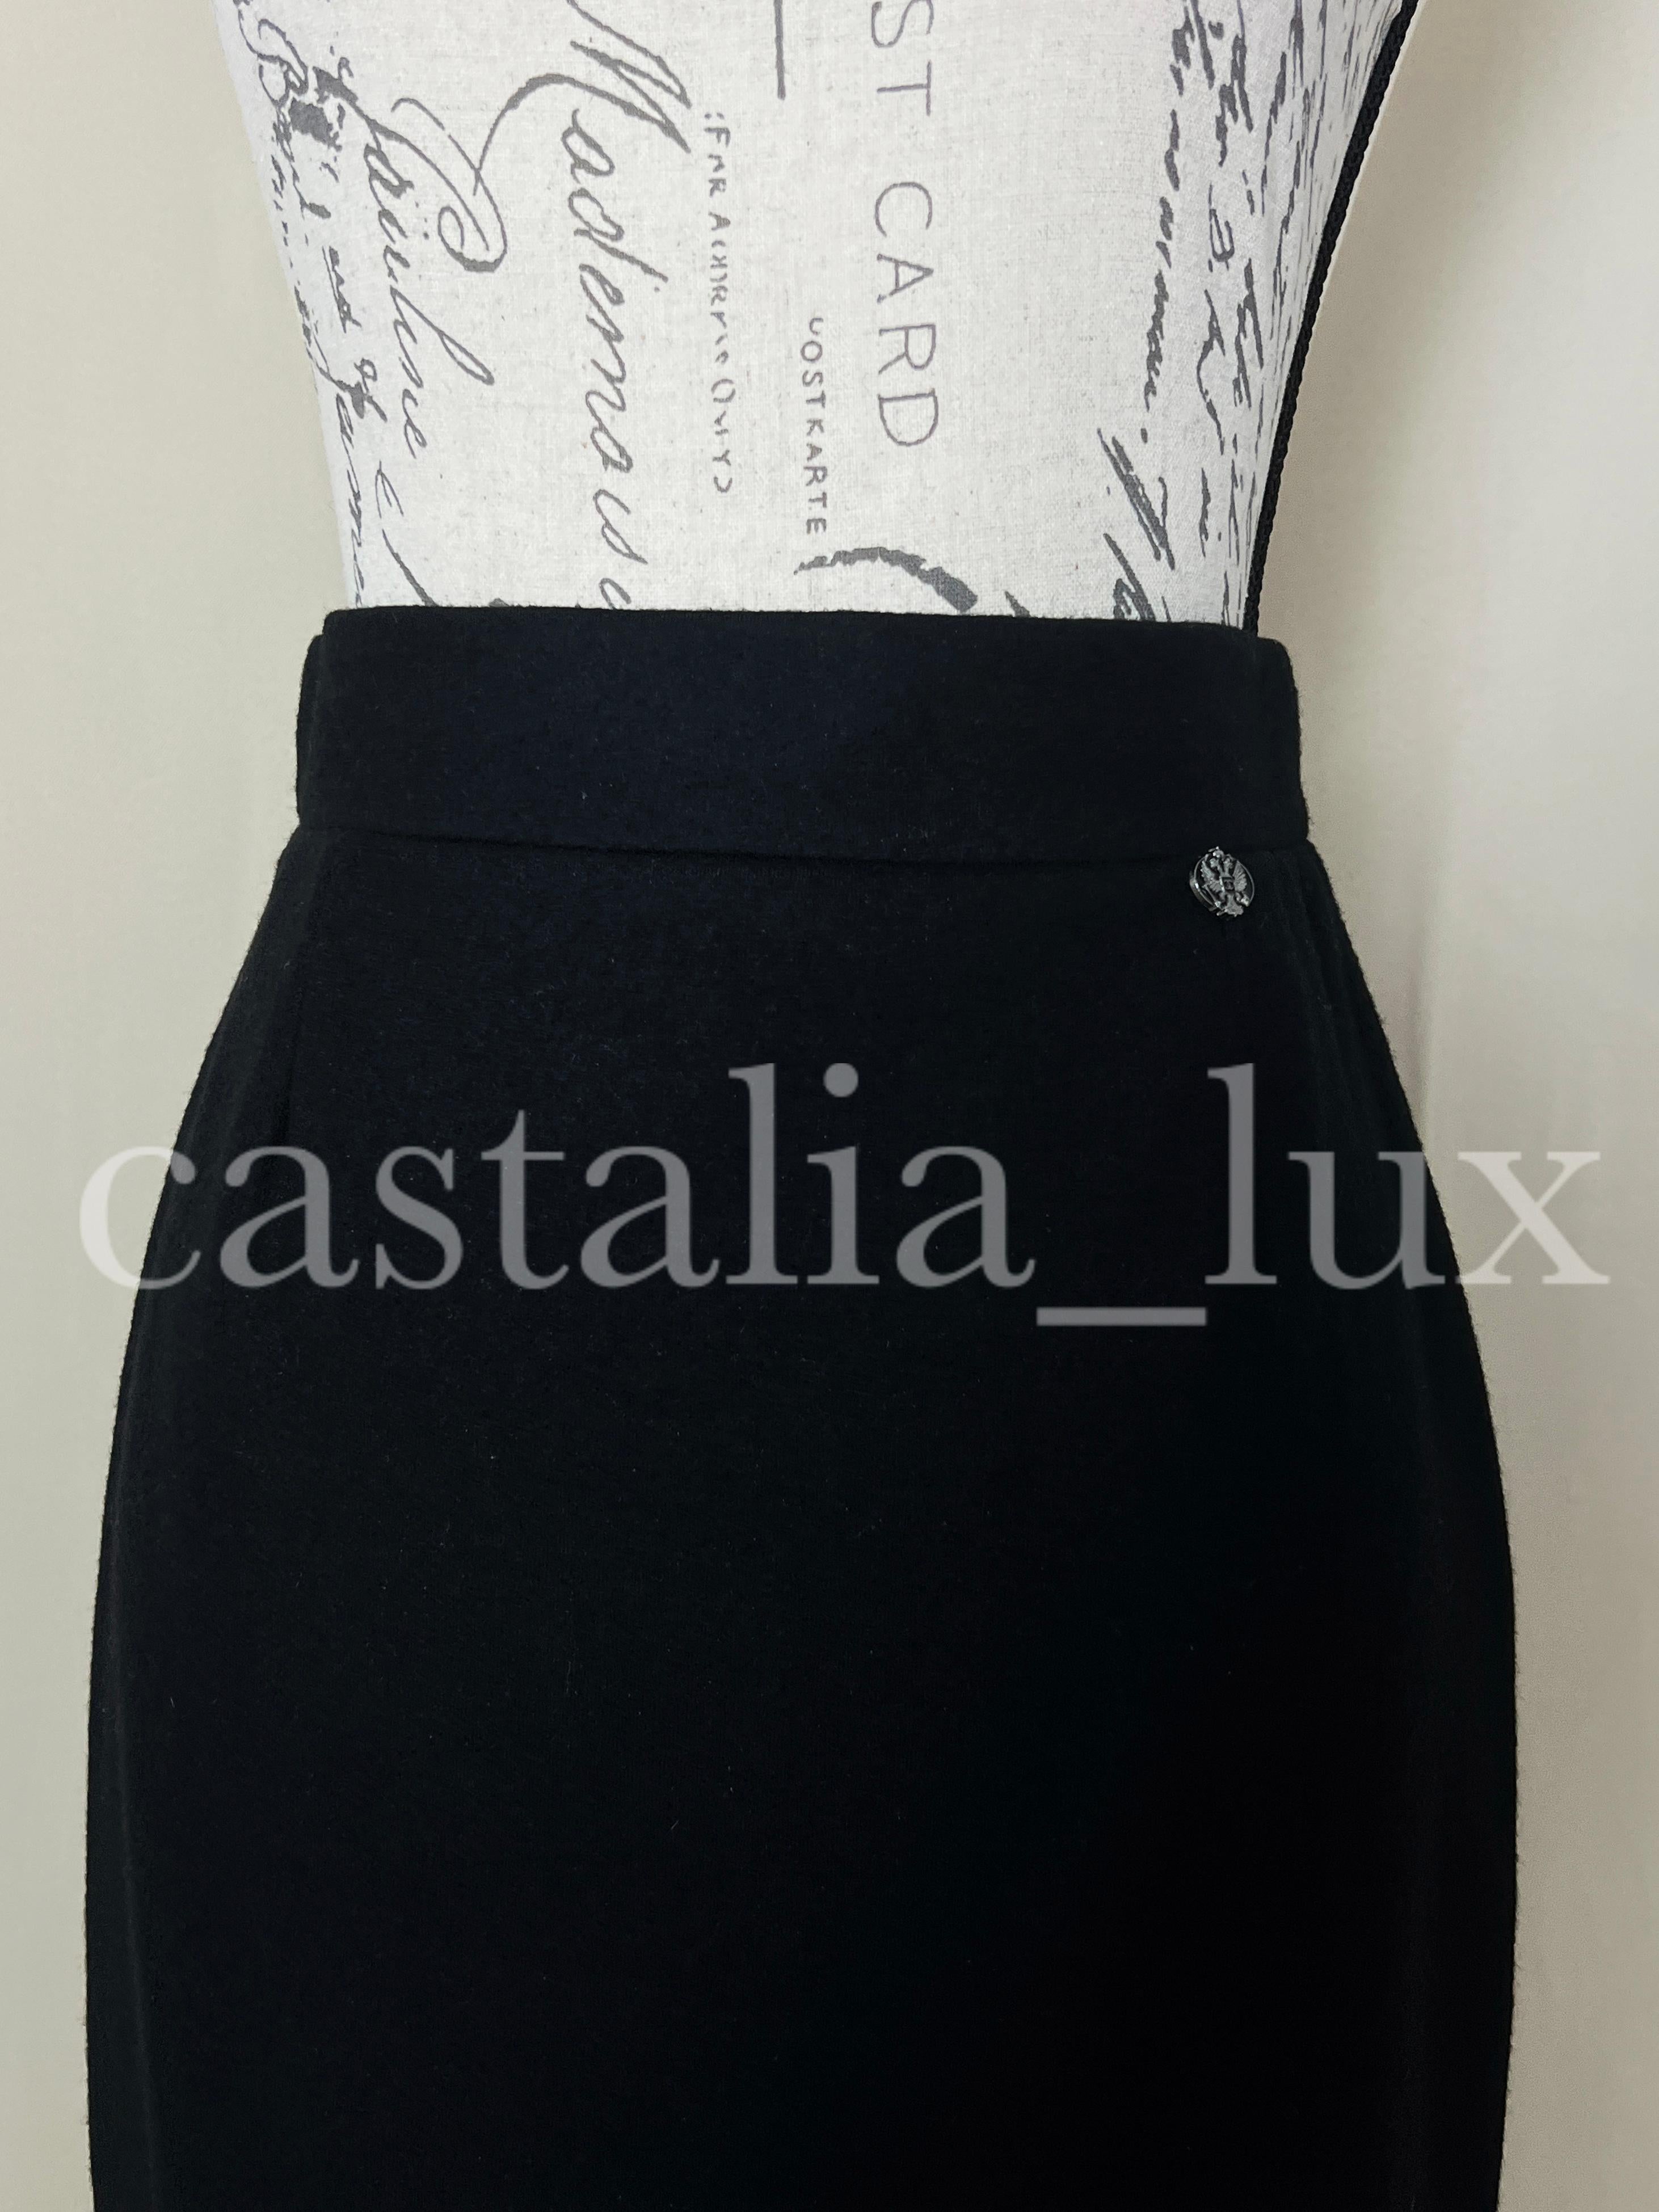 New black pencil skirt Chanel with CC logo eagle charm at waist.
Silk lining, size mark 38 FR. Never worn.